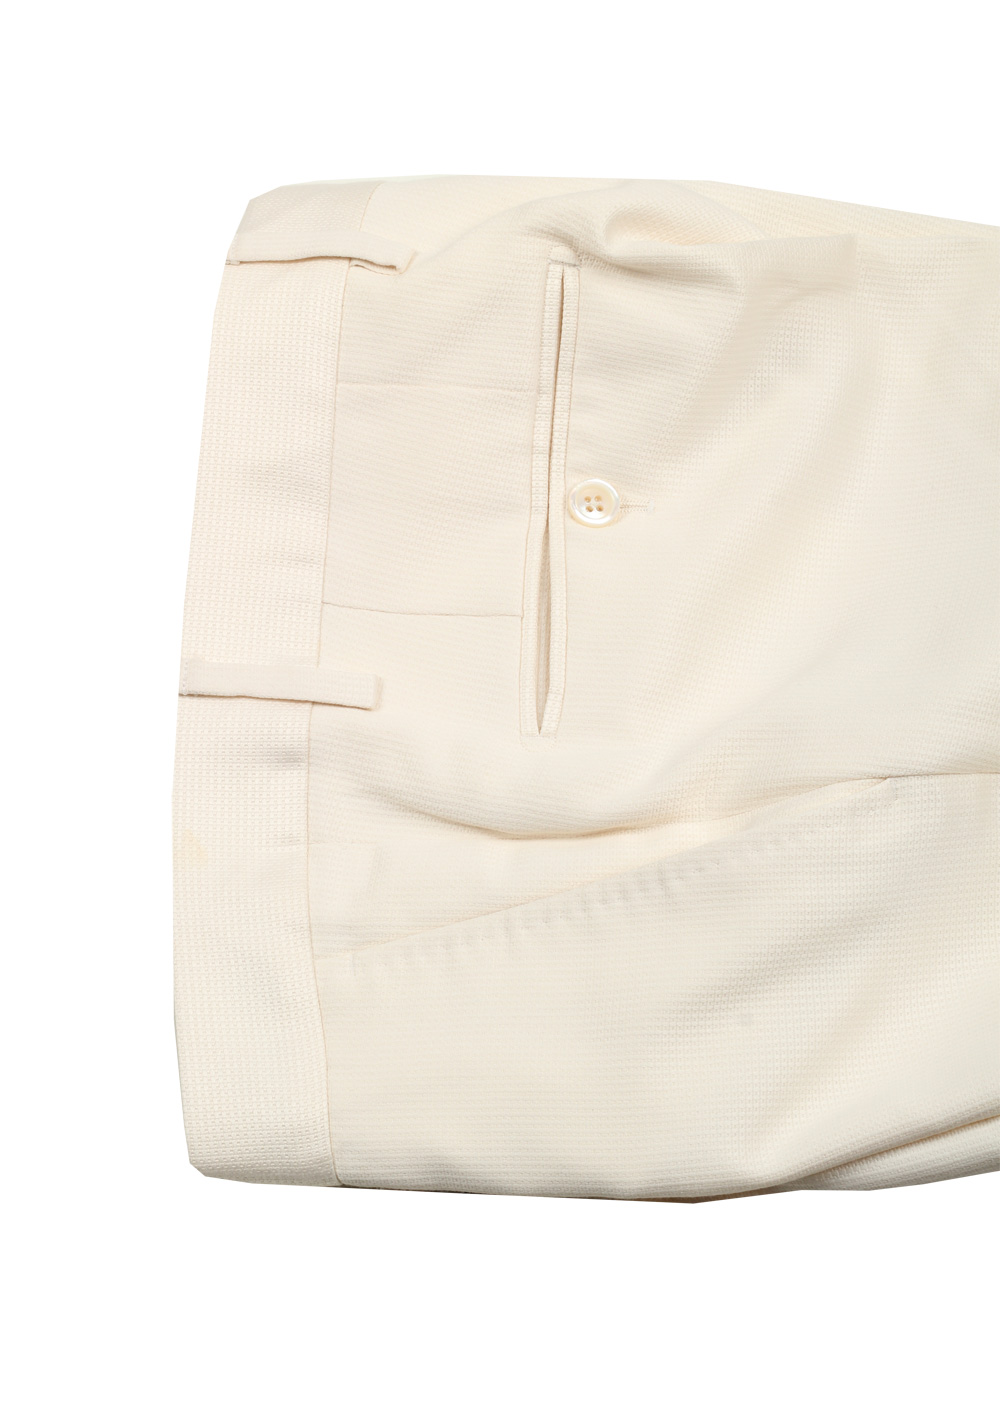 TOM FORD Buckley Off White Suit Size 48 / 38R U.S. Silk Cotton | Costume Limité